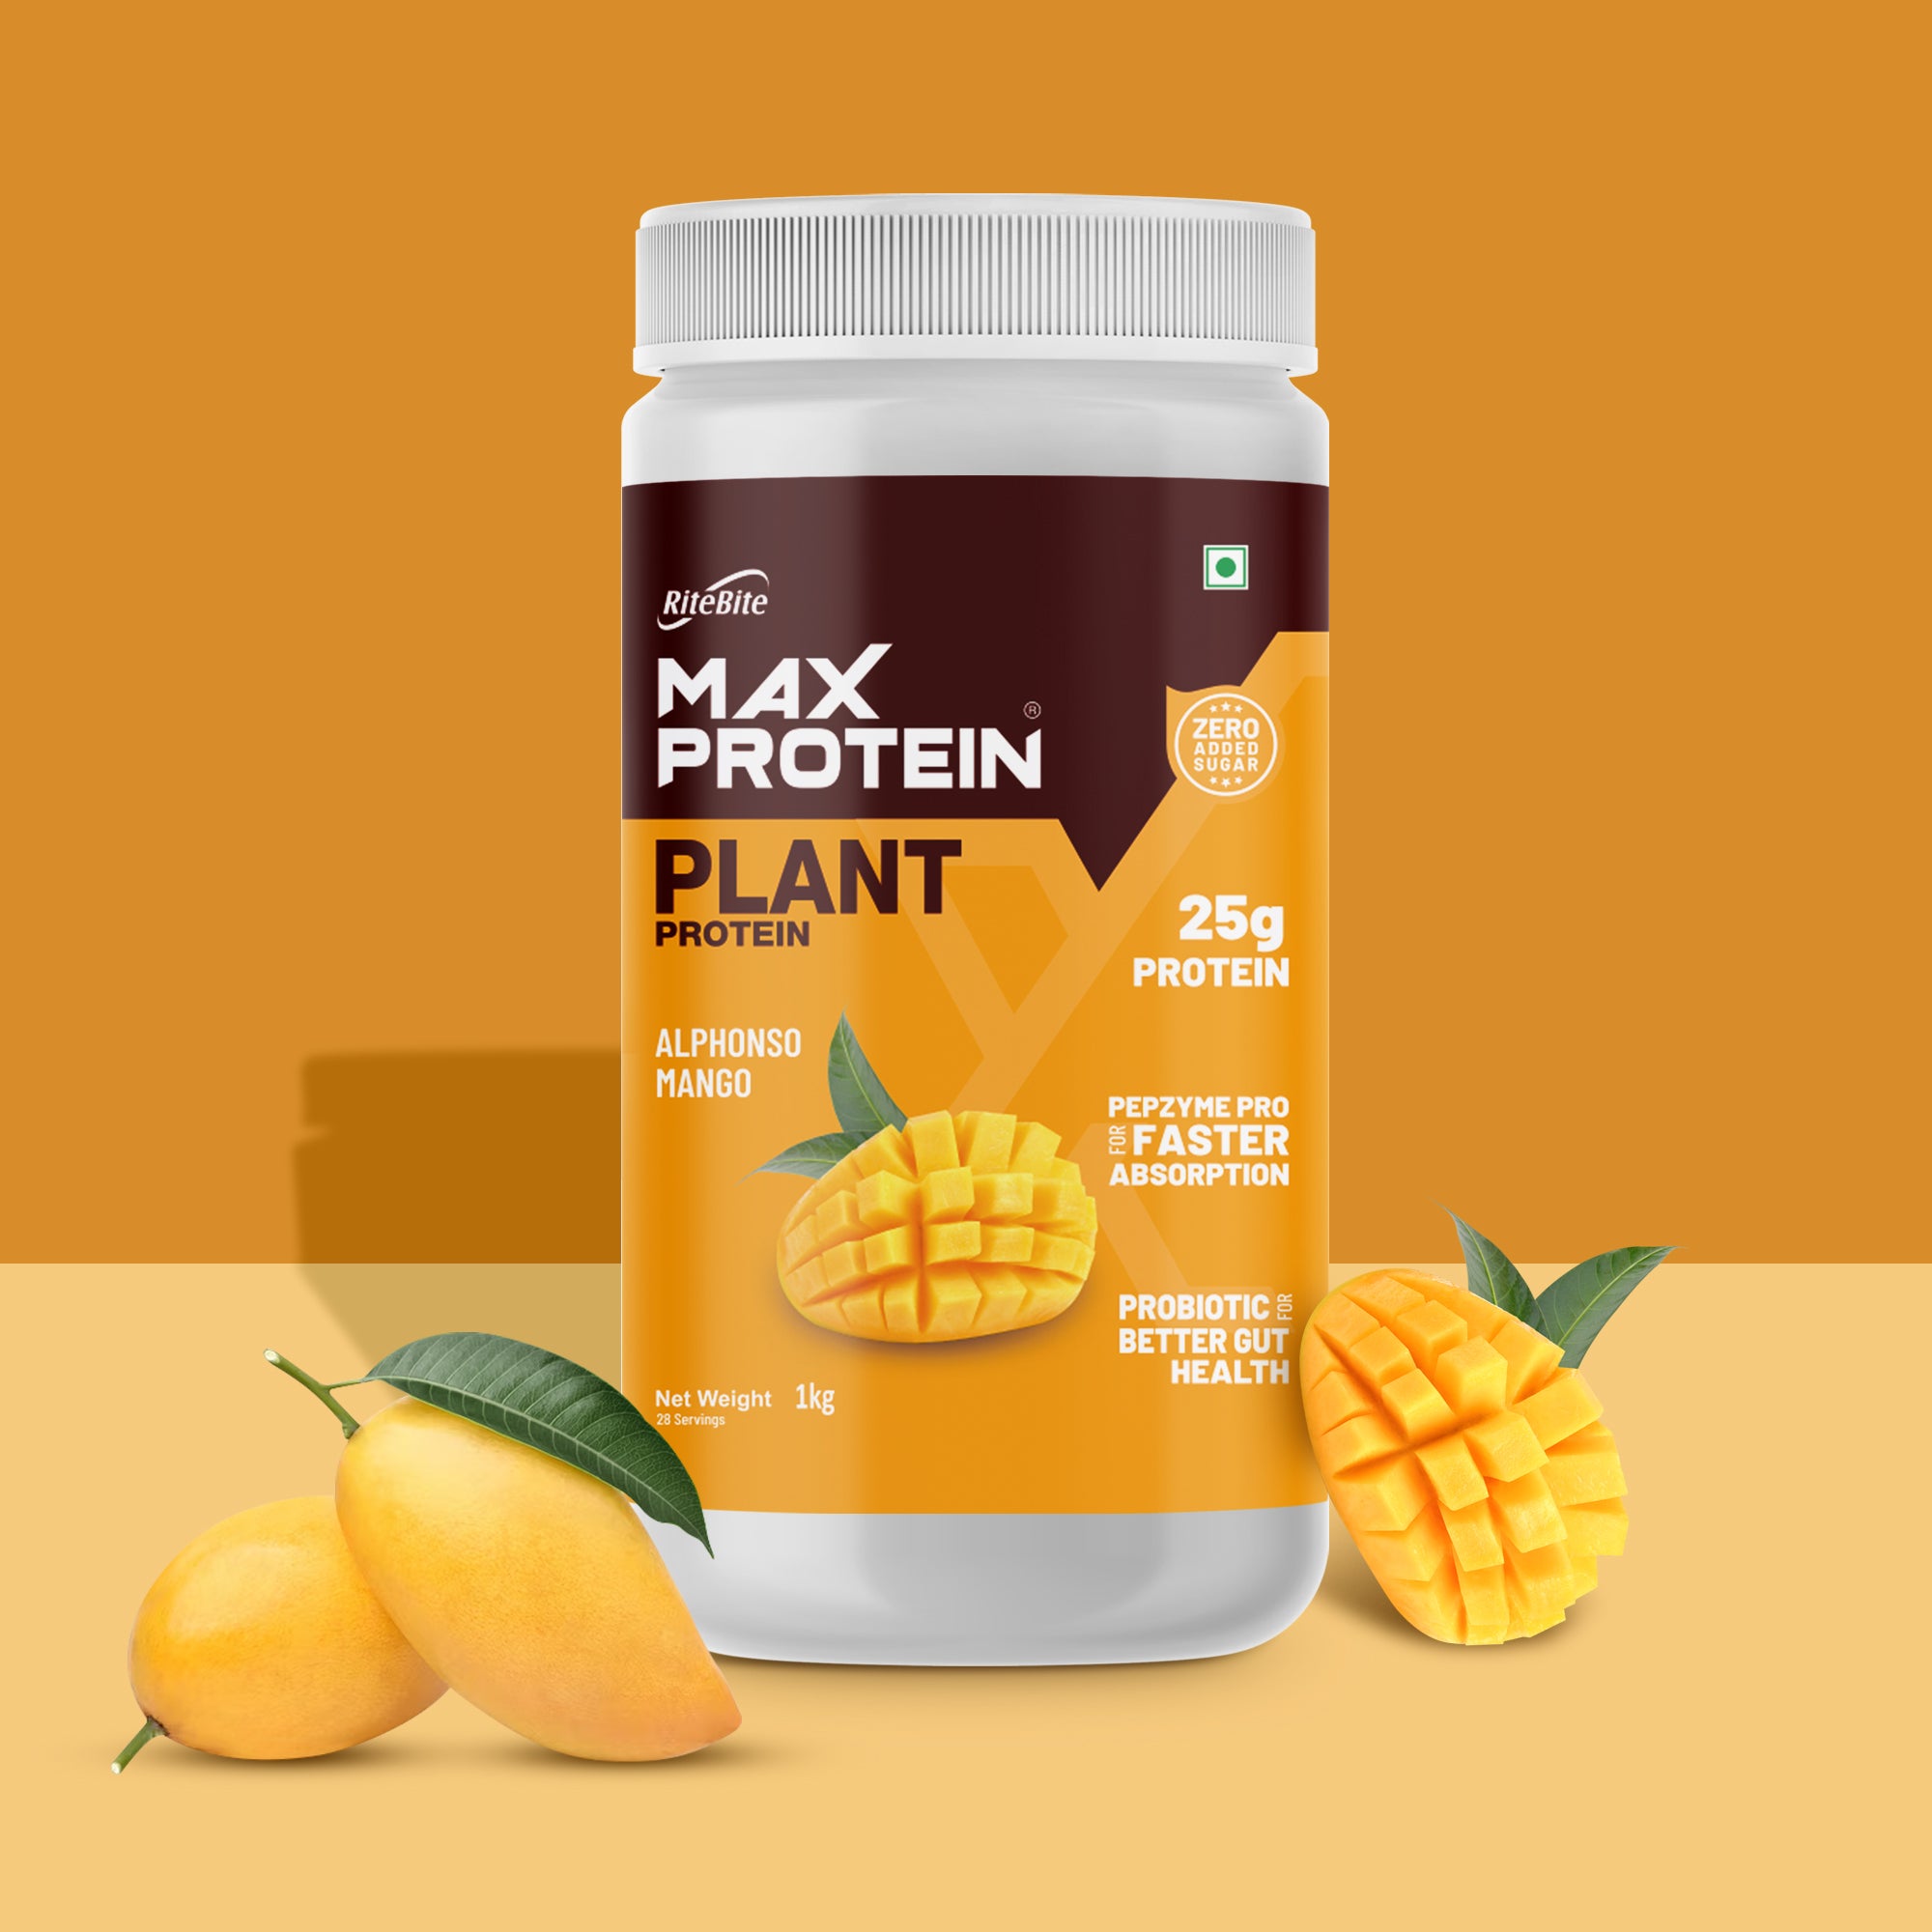 Max Protein Plant Protein - Alphonso Mango